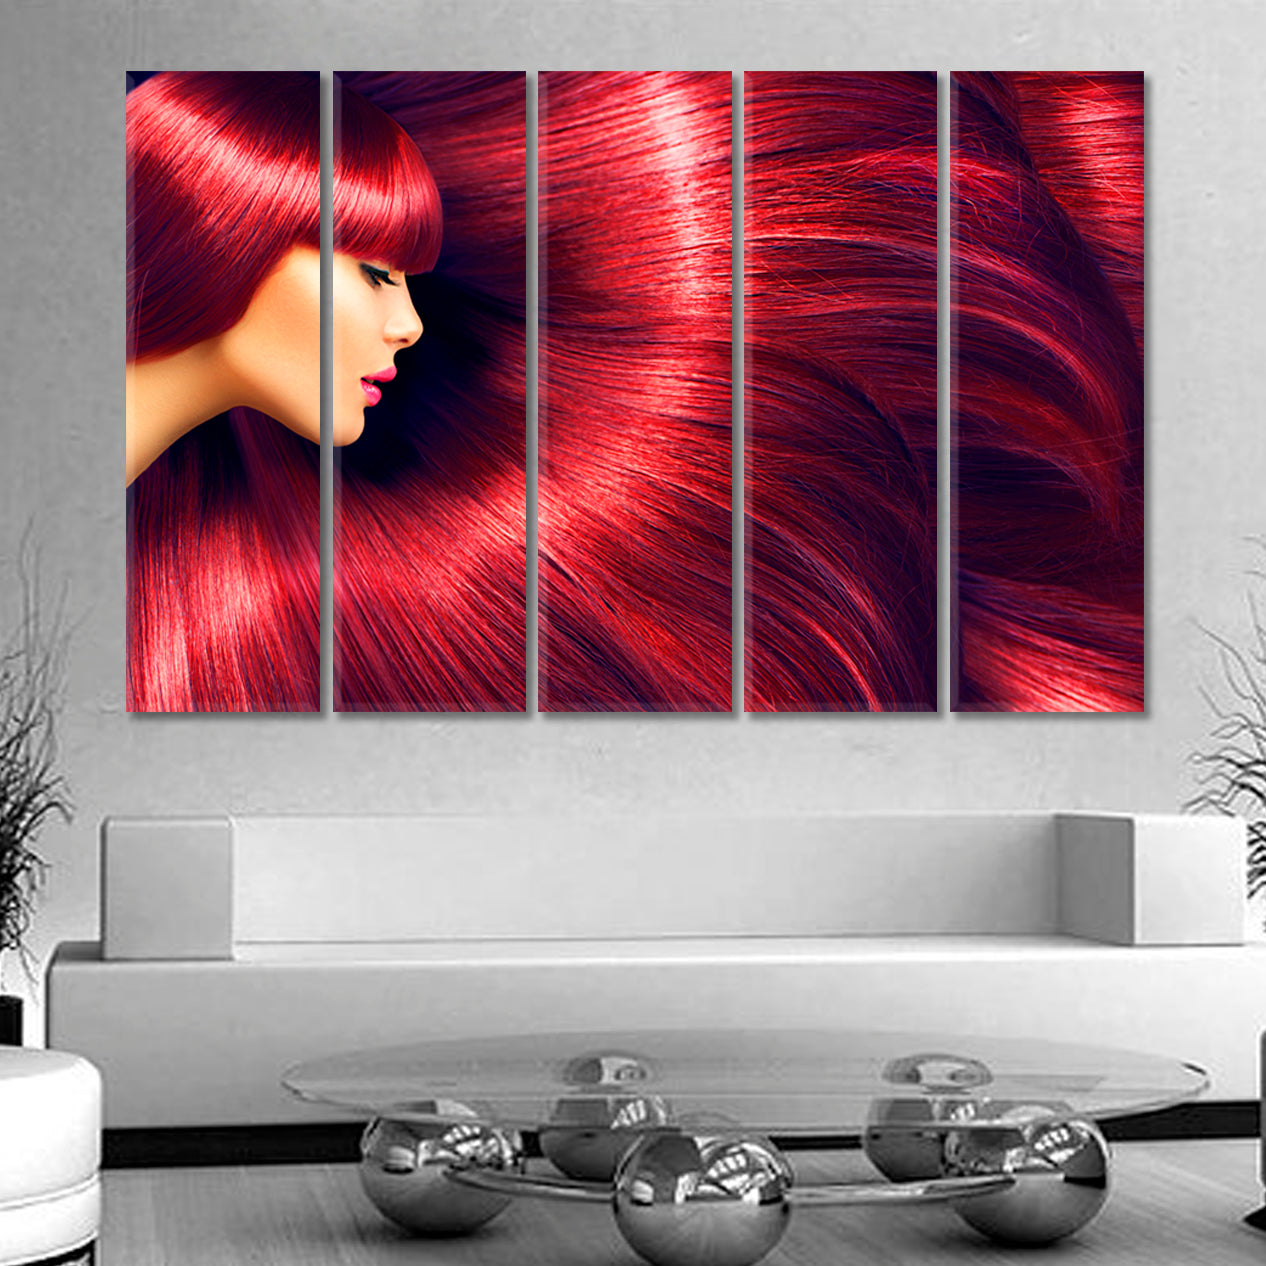 BEAUTY CONCEPT Beautiful Luxurious Long Red Hair Beauty Salon Artwork Prints Artesty   